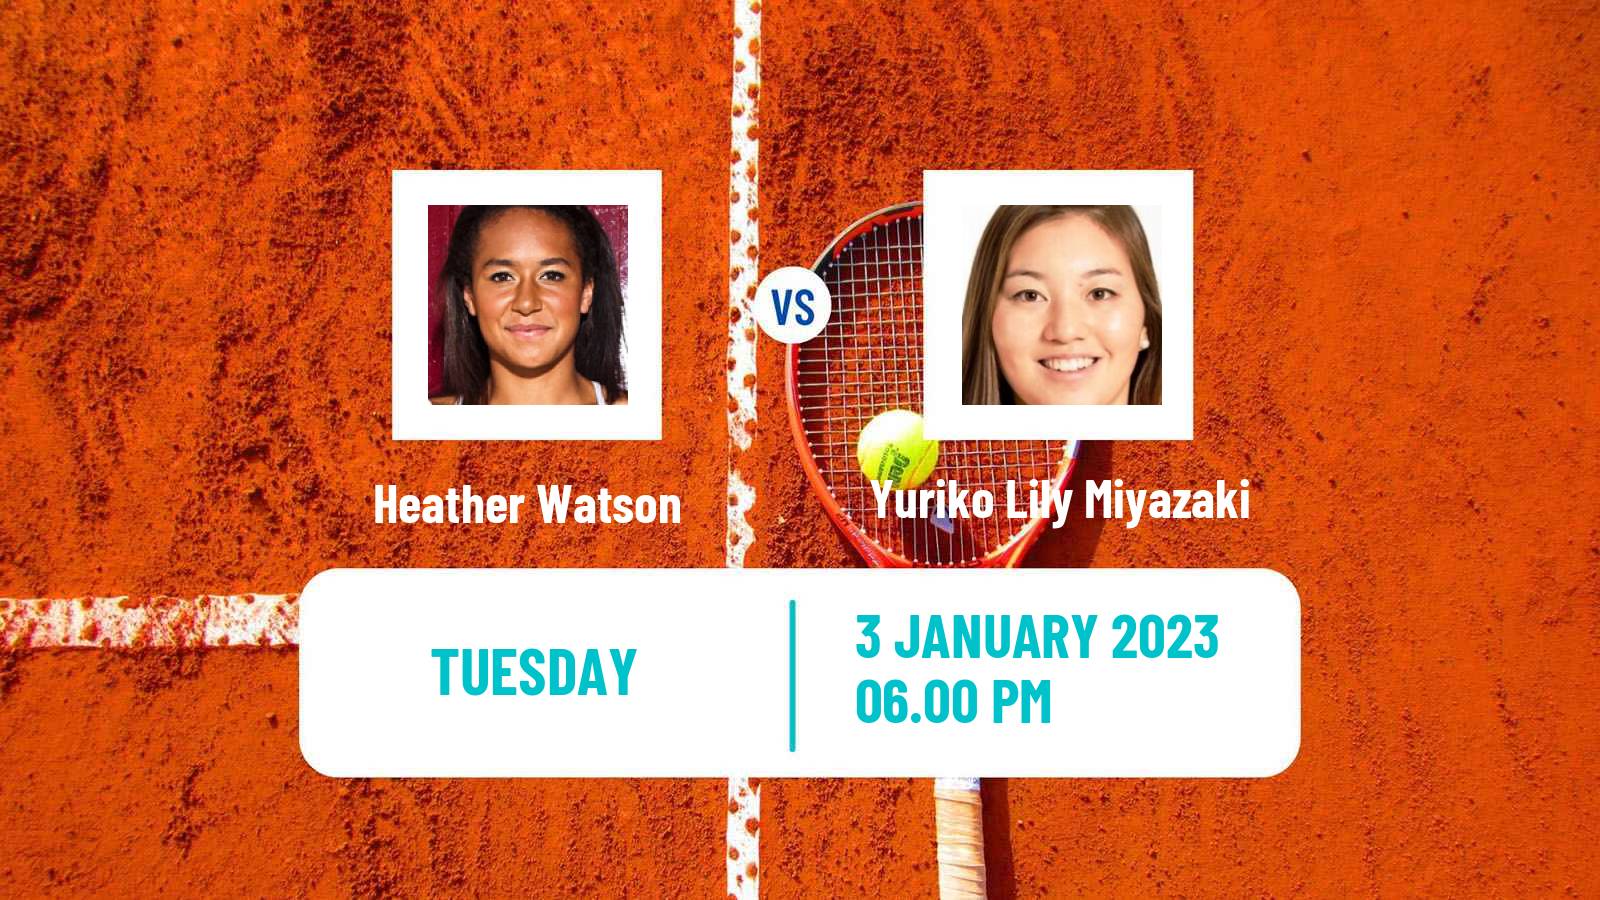 Tennis ITF Tournaments Heather Watson - Yuriko Lily Miyazaki